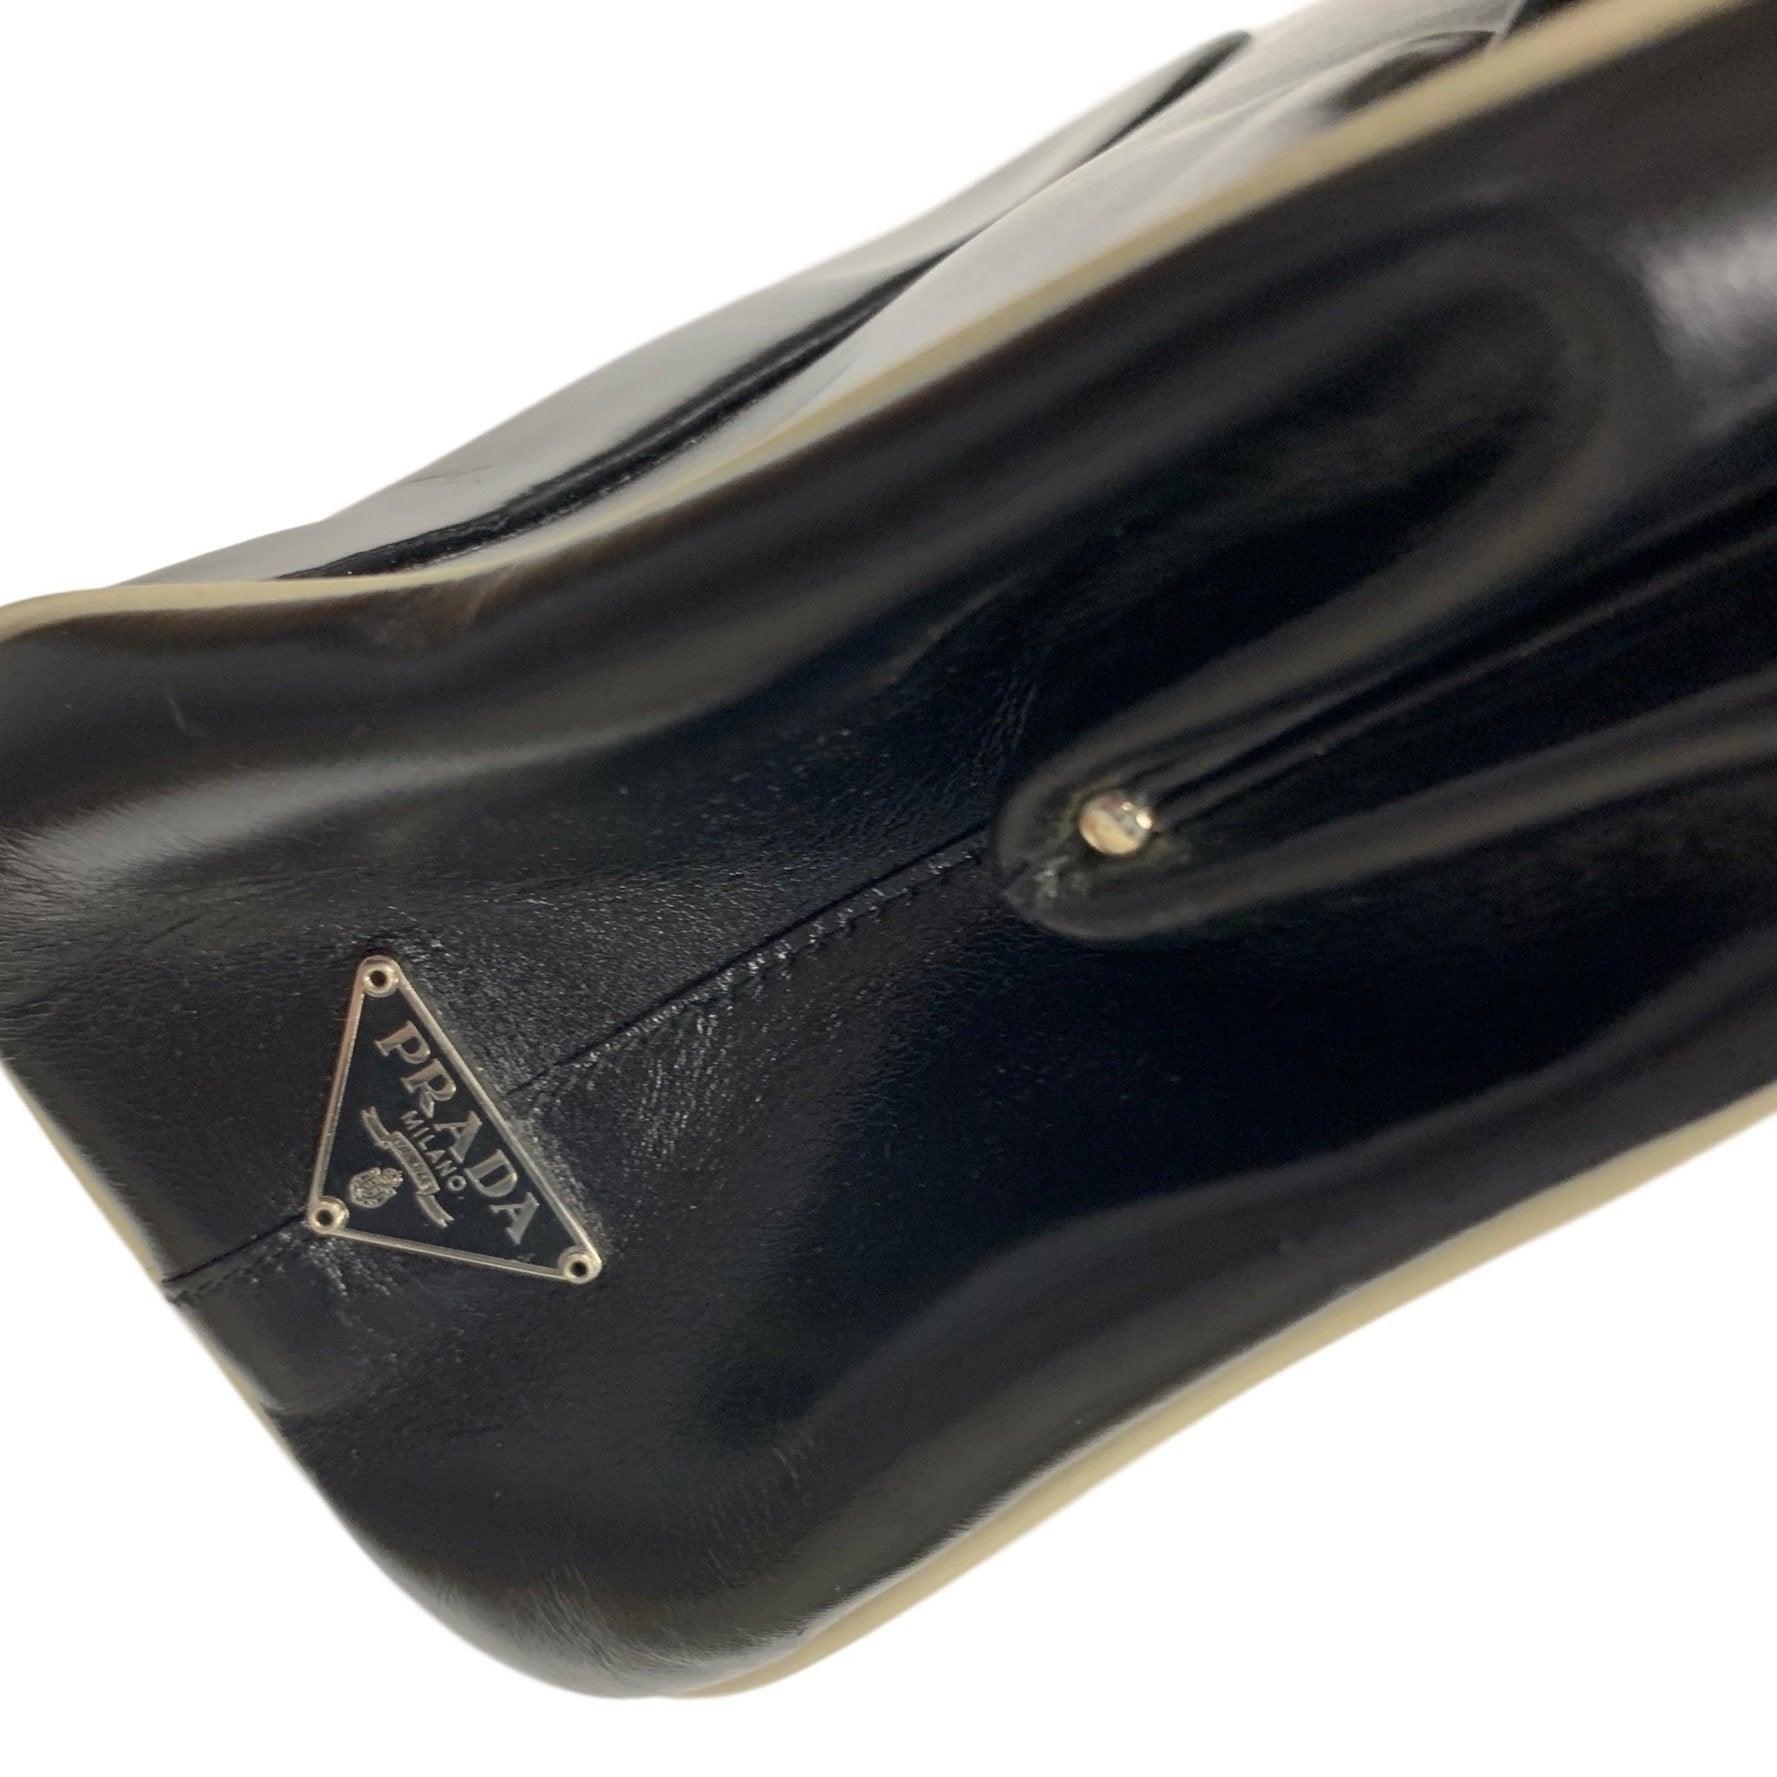 Prada Black Leather Top Handle Clutch Bag - Handbags